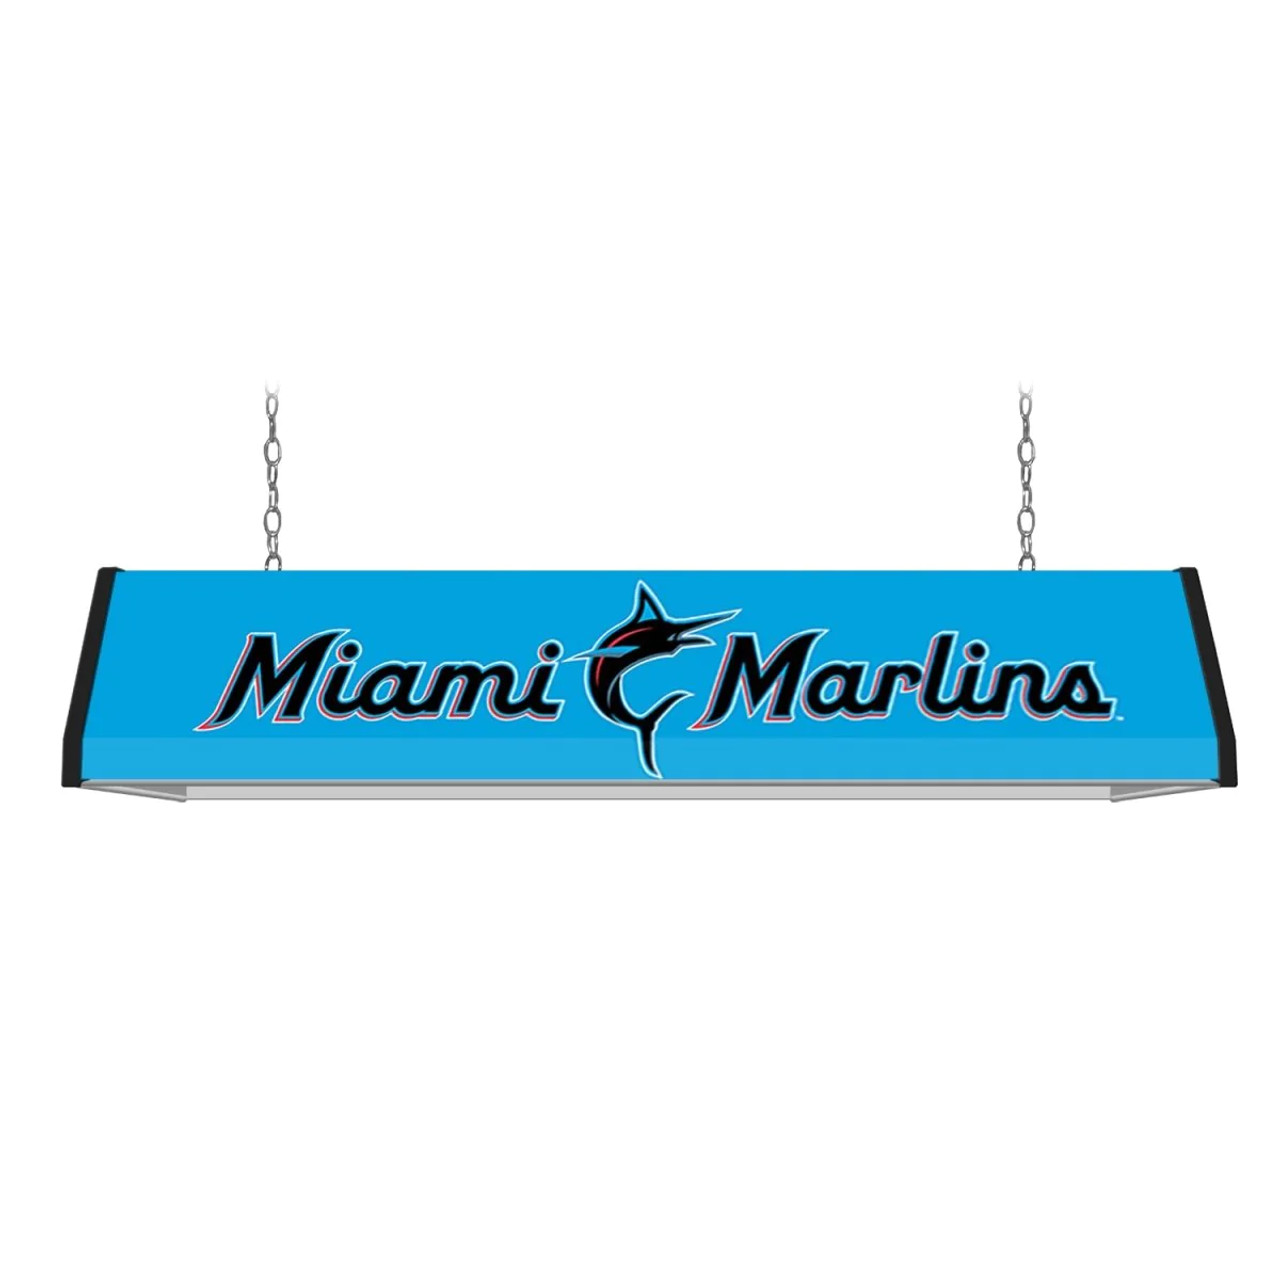 Miami Marlins: Standard Pool Table Light B Version, MBMARLINS